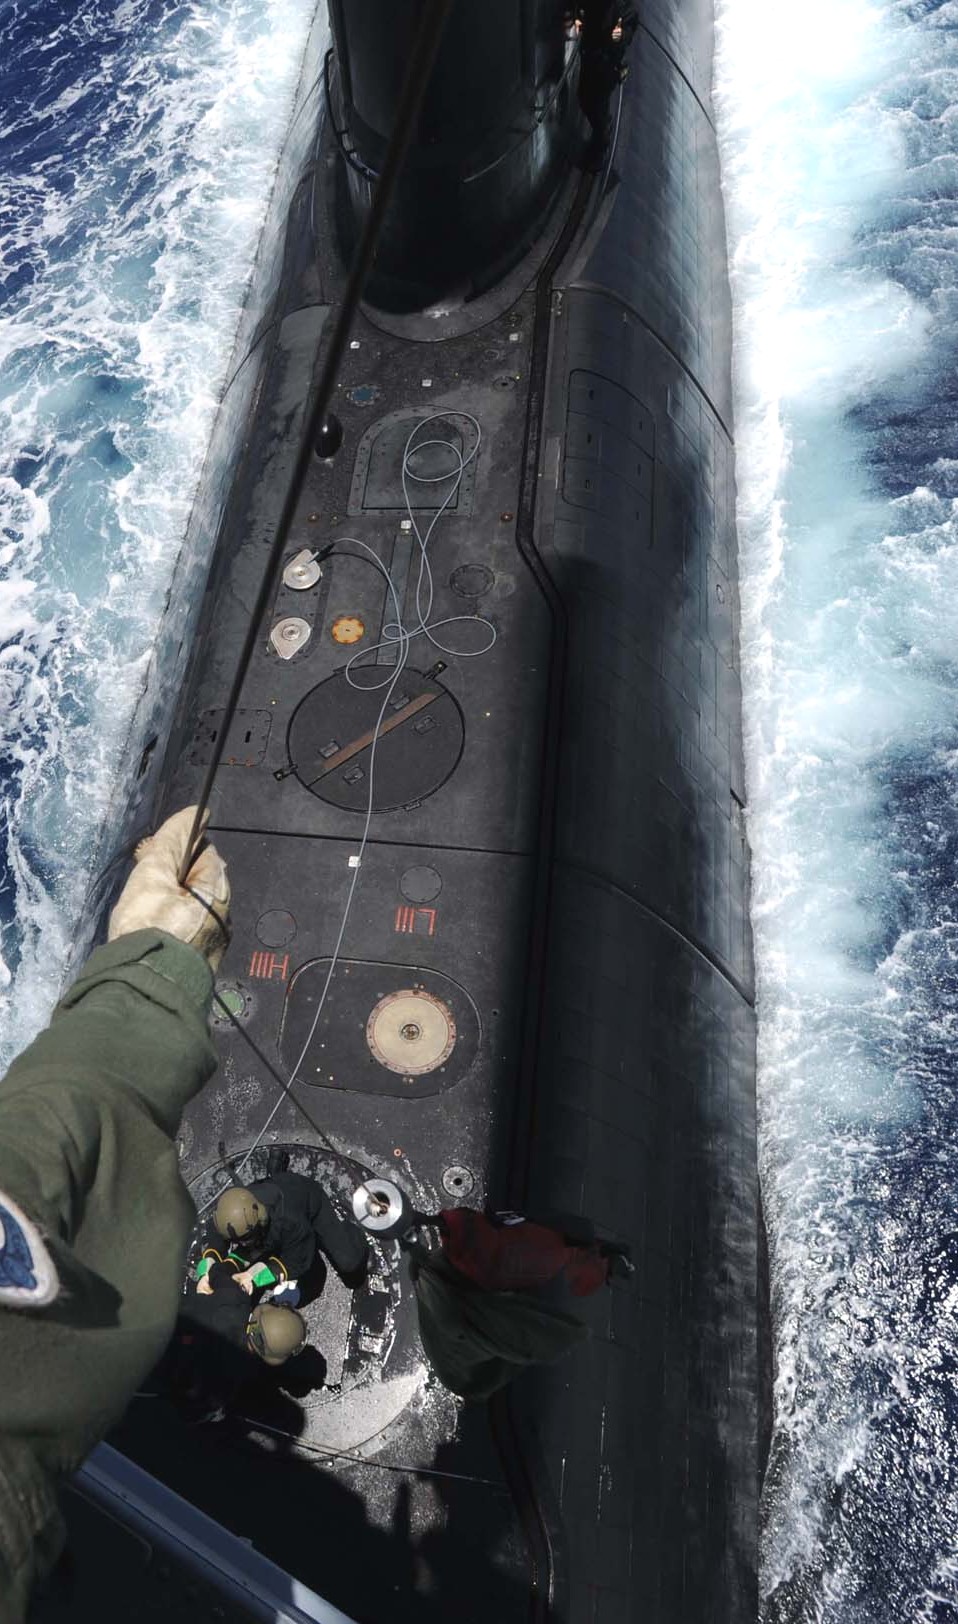 ssk-876 hmcs victoria upholder class attack submarine hunter killer ncsm royal canadian navy 10